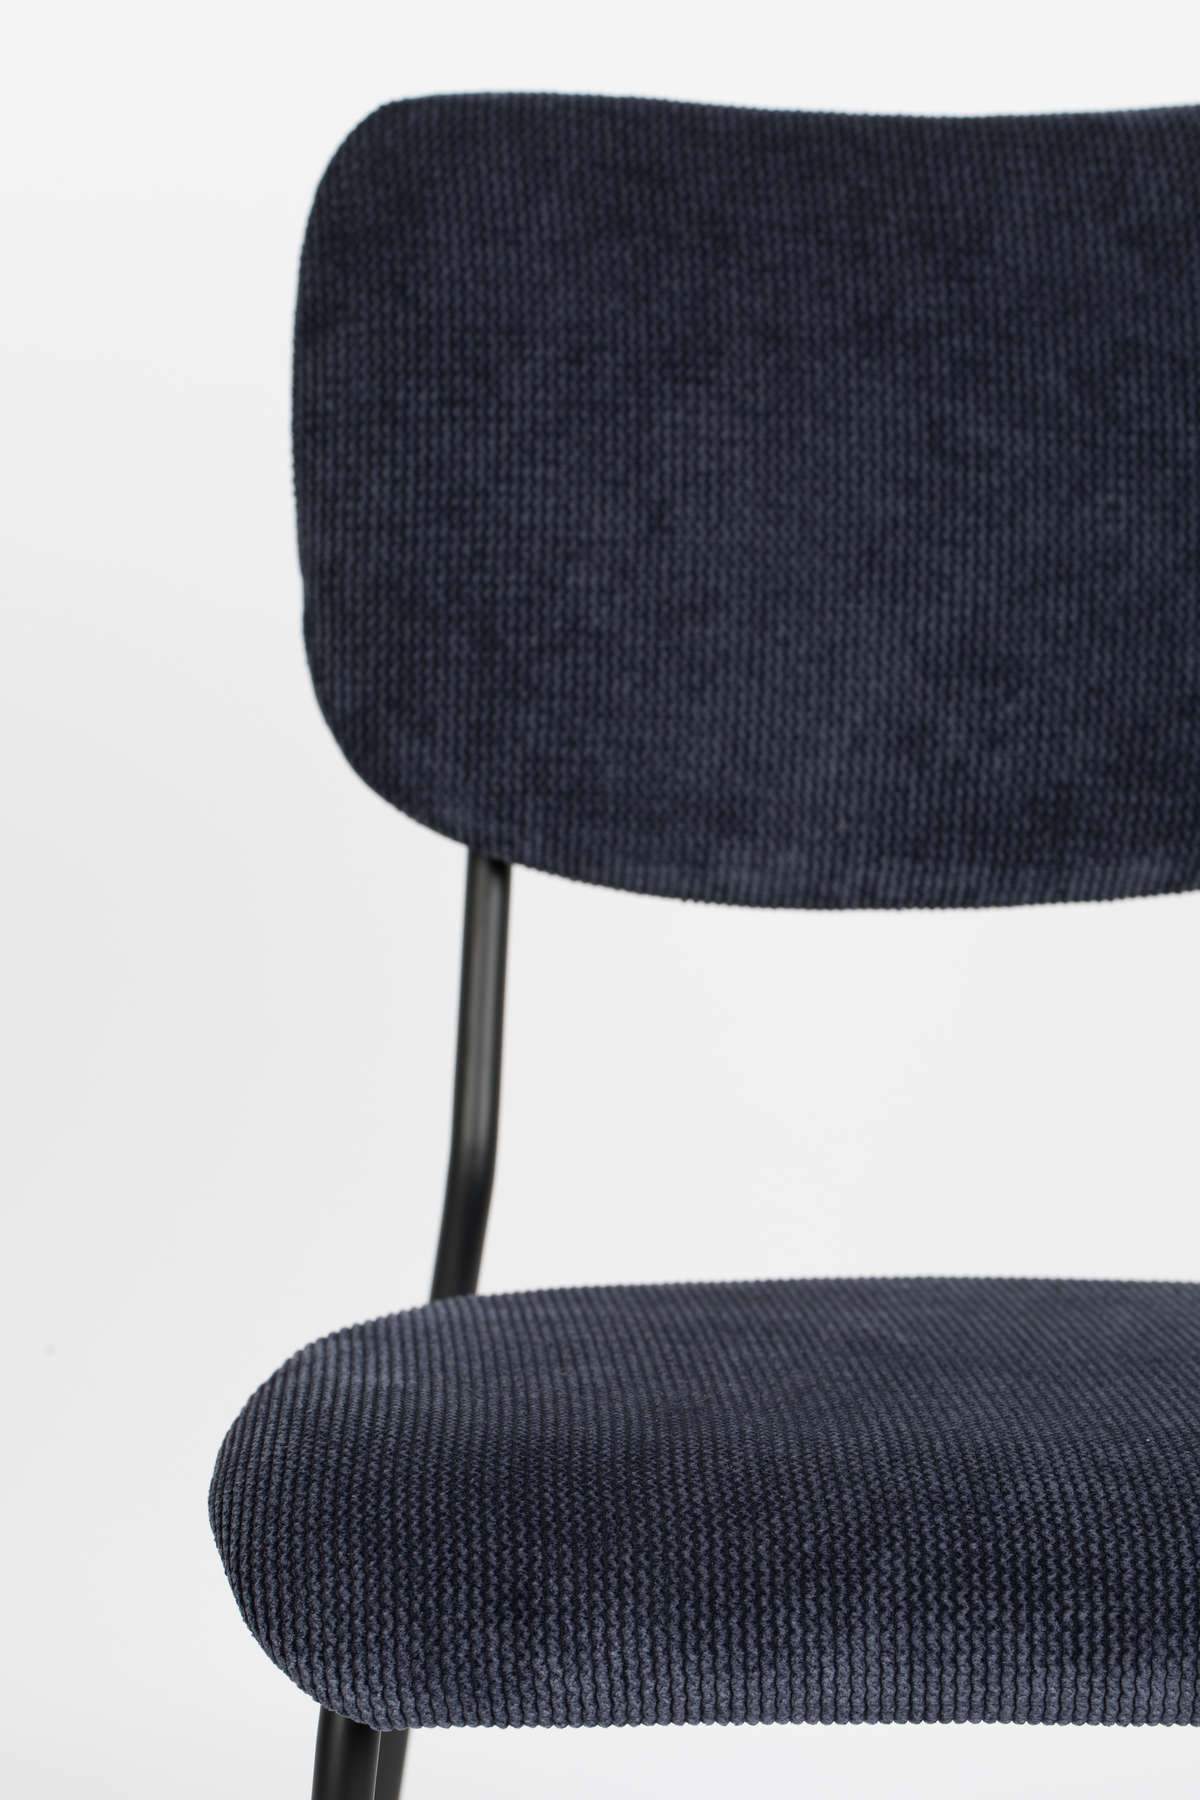 BENSON chair navy blue, Zuiver, Eye on Design